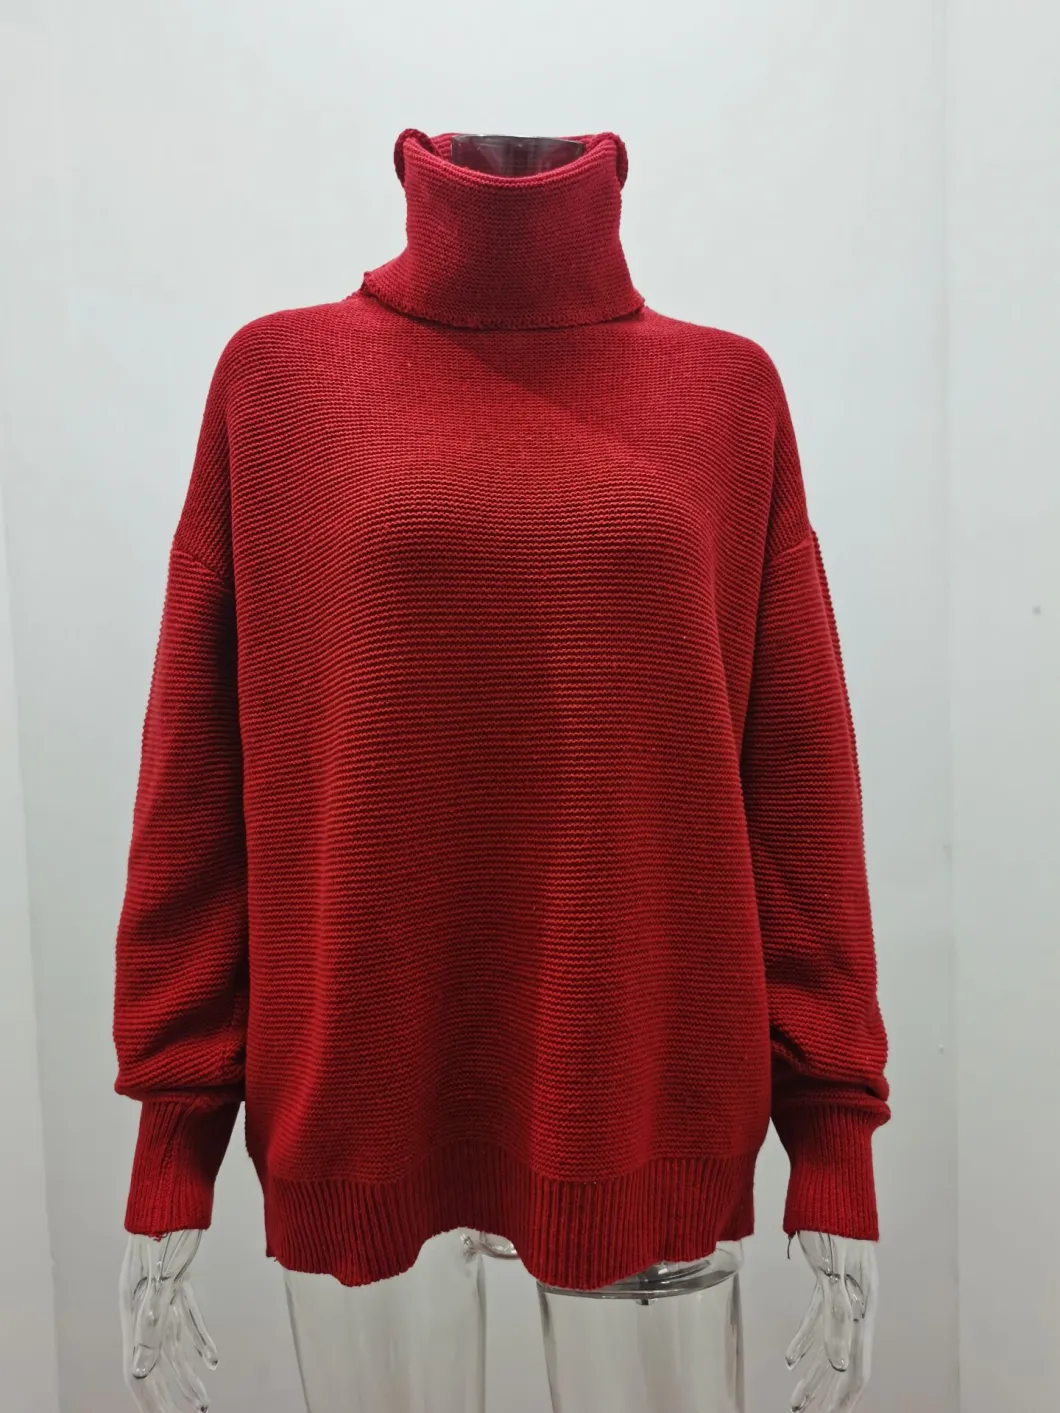 New Arrivals Winter Long Sleeve Turtleneck Knit Women's Sweater Tops